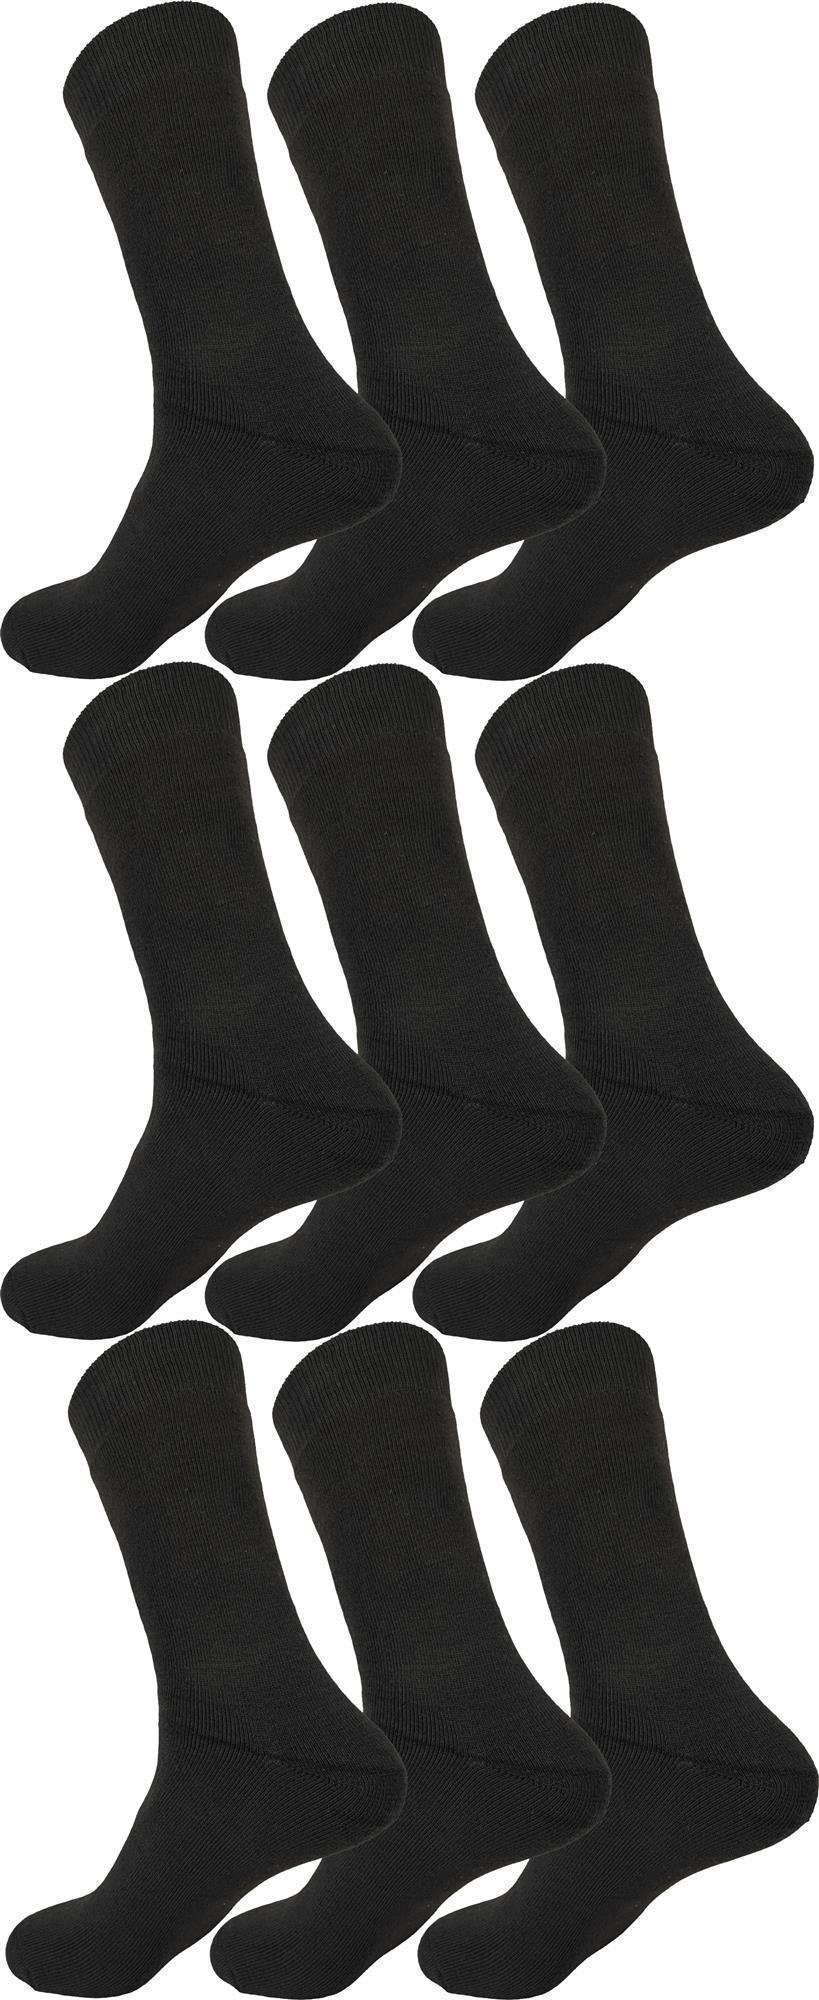 EloModa Thermosocken 12 Paar Thermo Winter Socken Vollfrottee Warm Baumwolle; 39-42 43-46 (12-Paar)